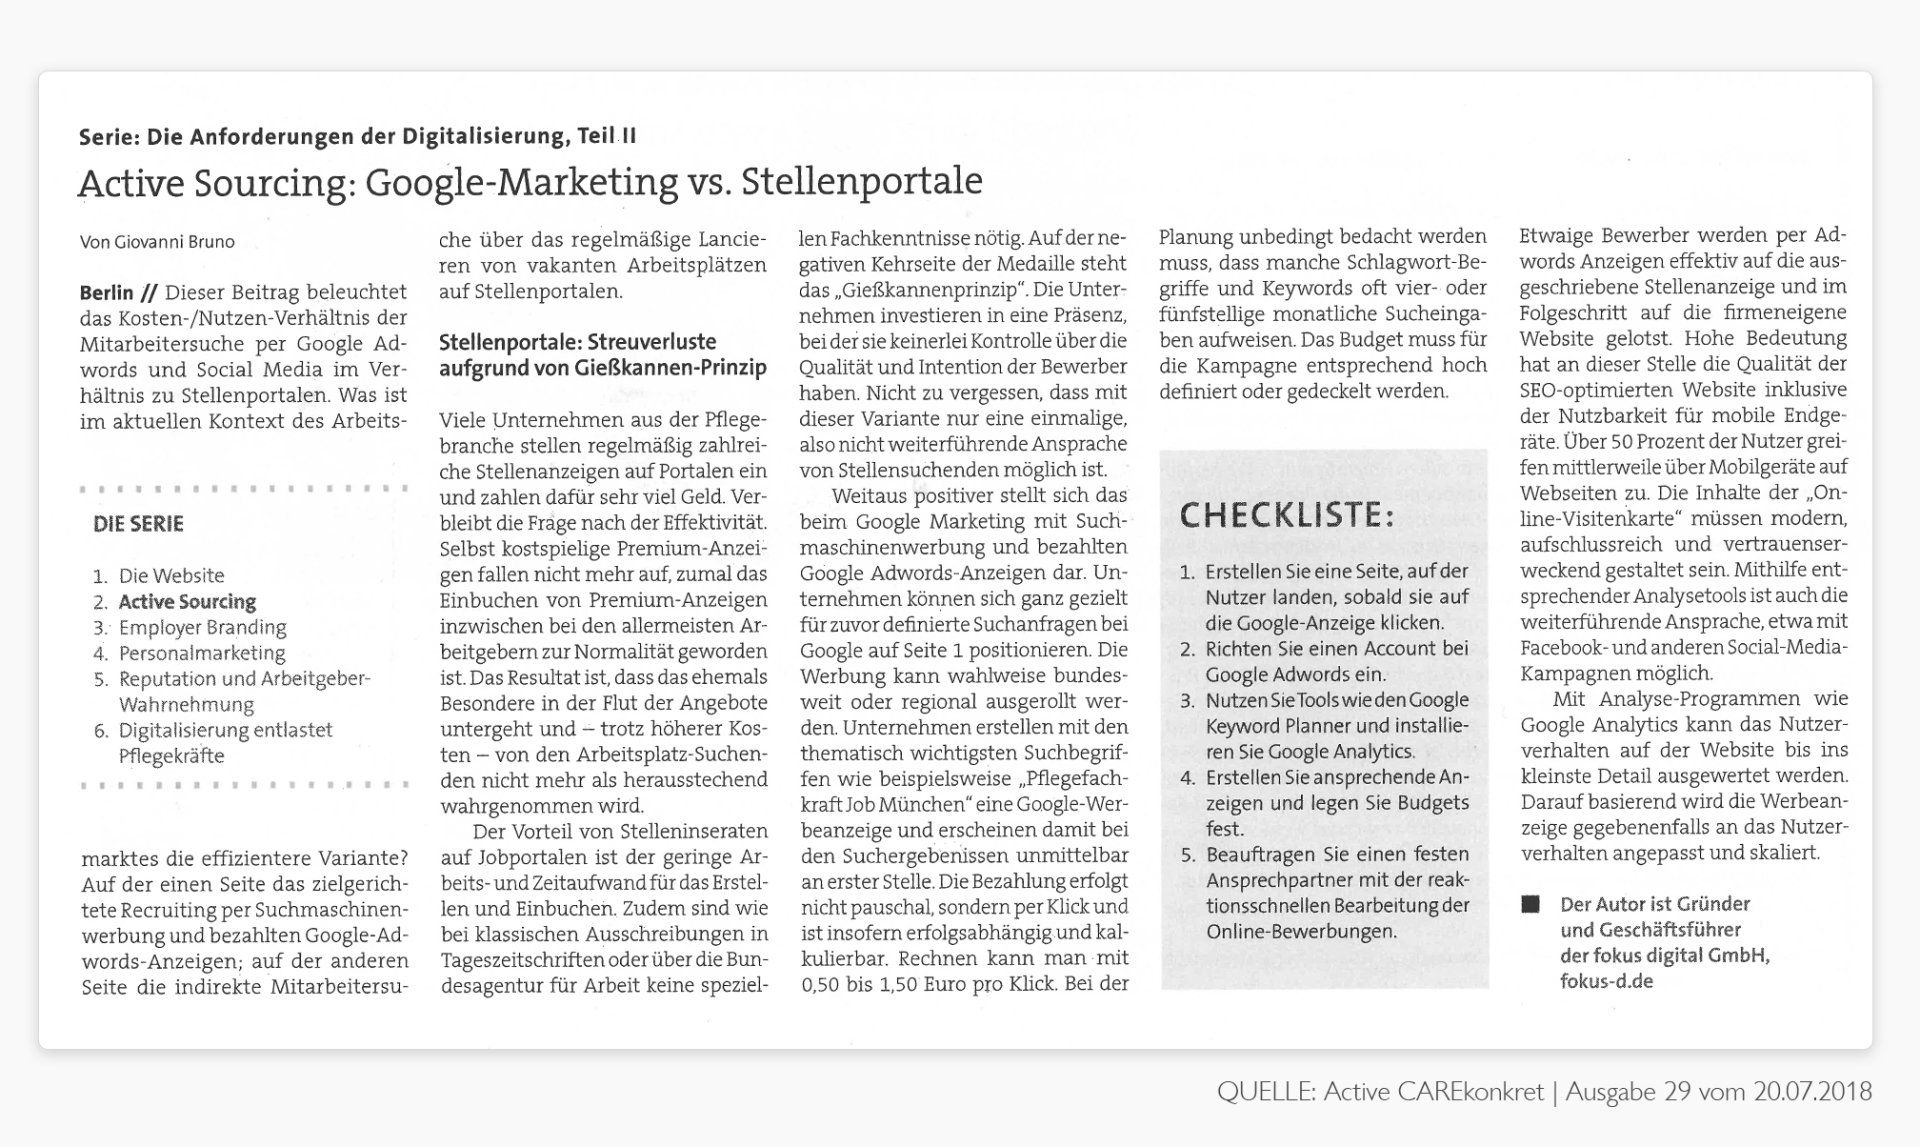 Active Sourcing: Google Marketing vs. Stellenportale